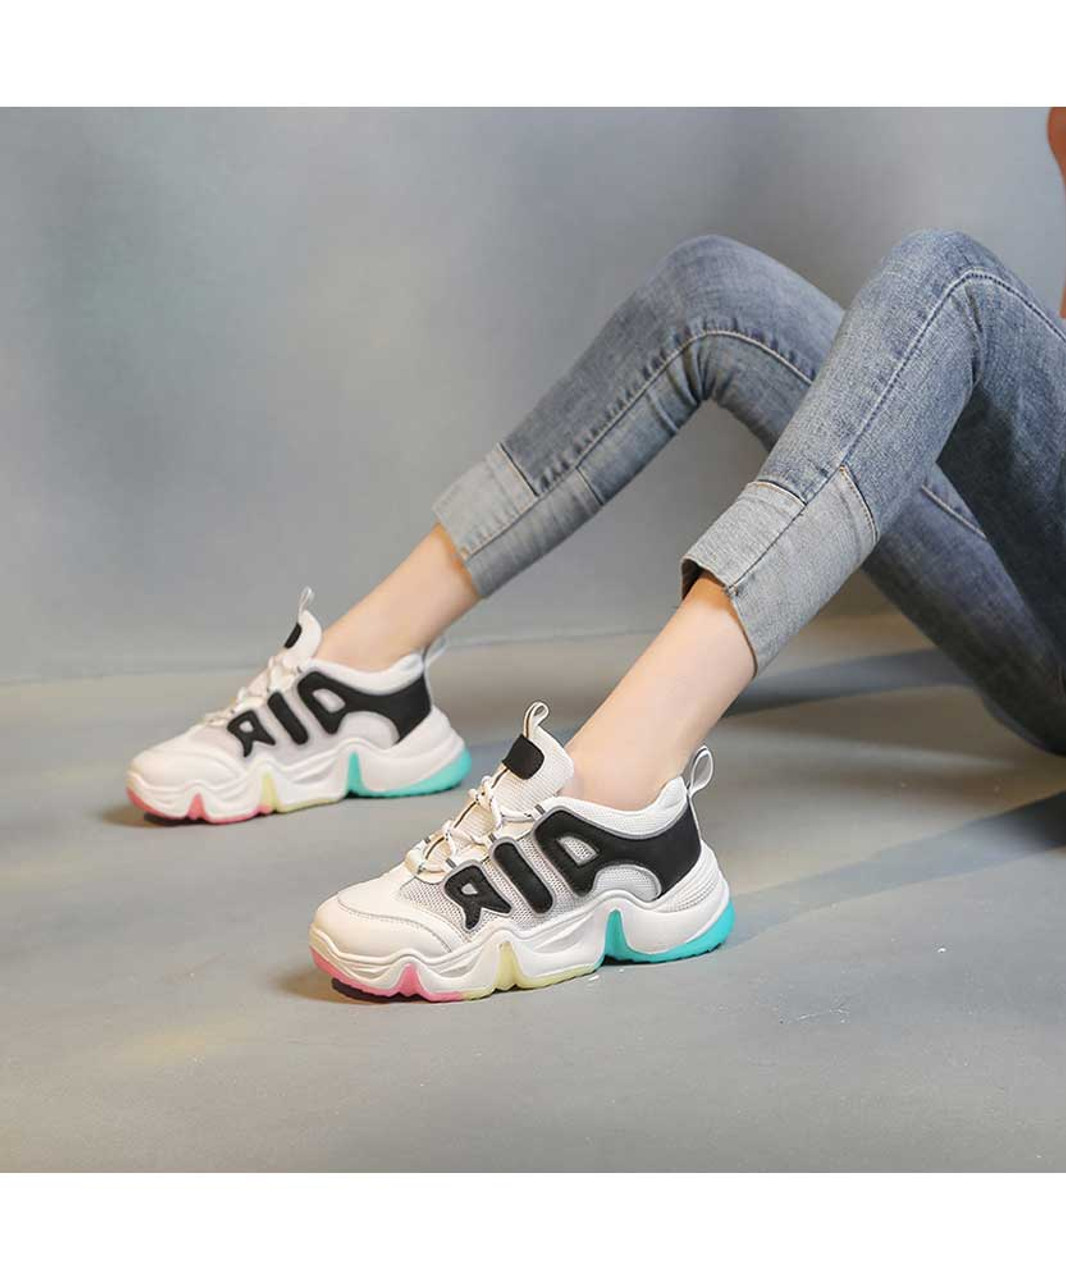 Black white mix color mesh vamp shoe sneaker | Womens shoe sneakers ...